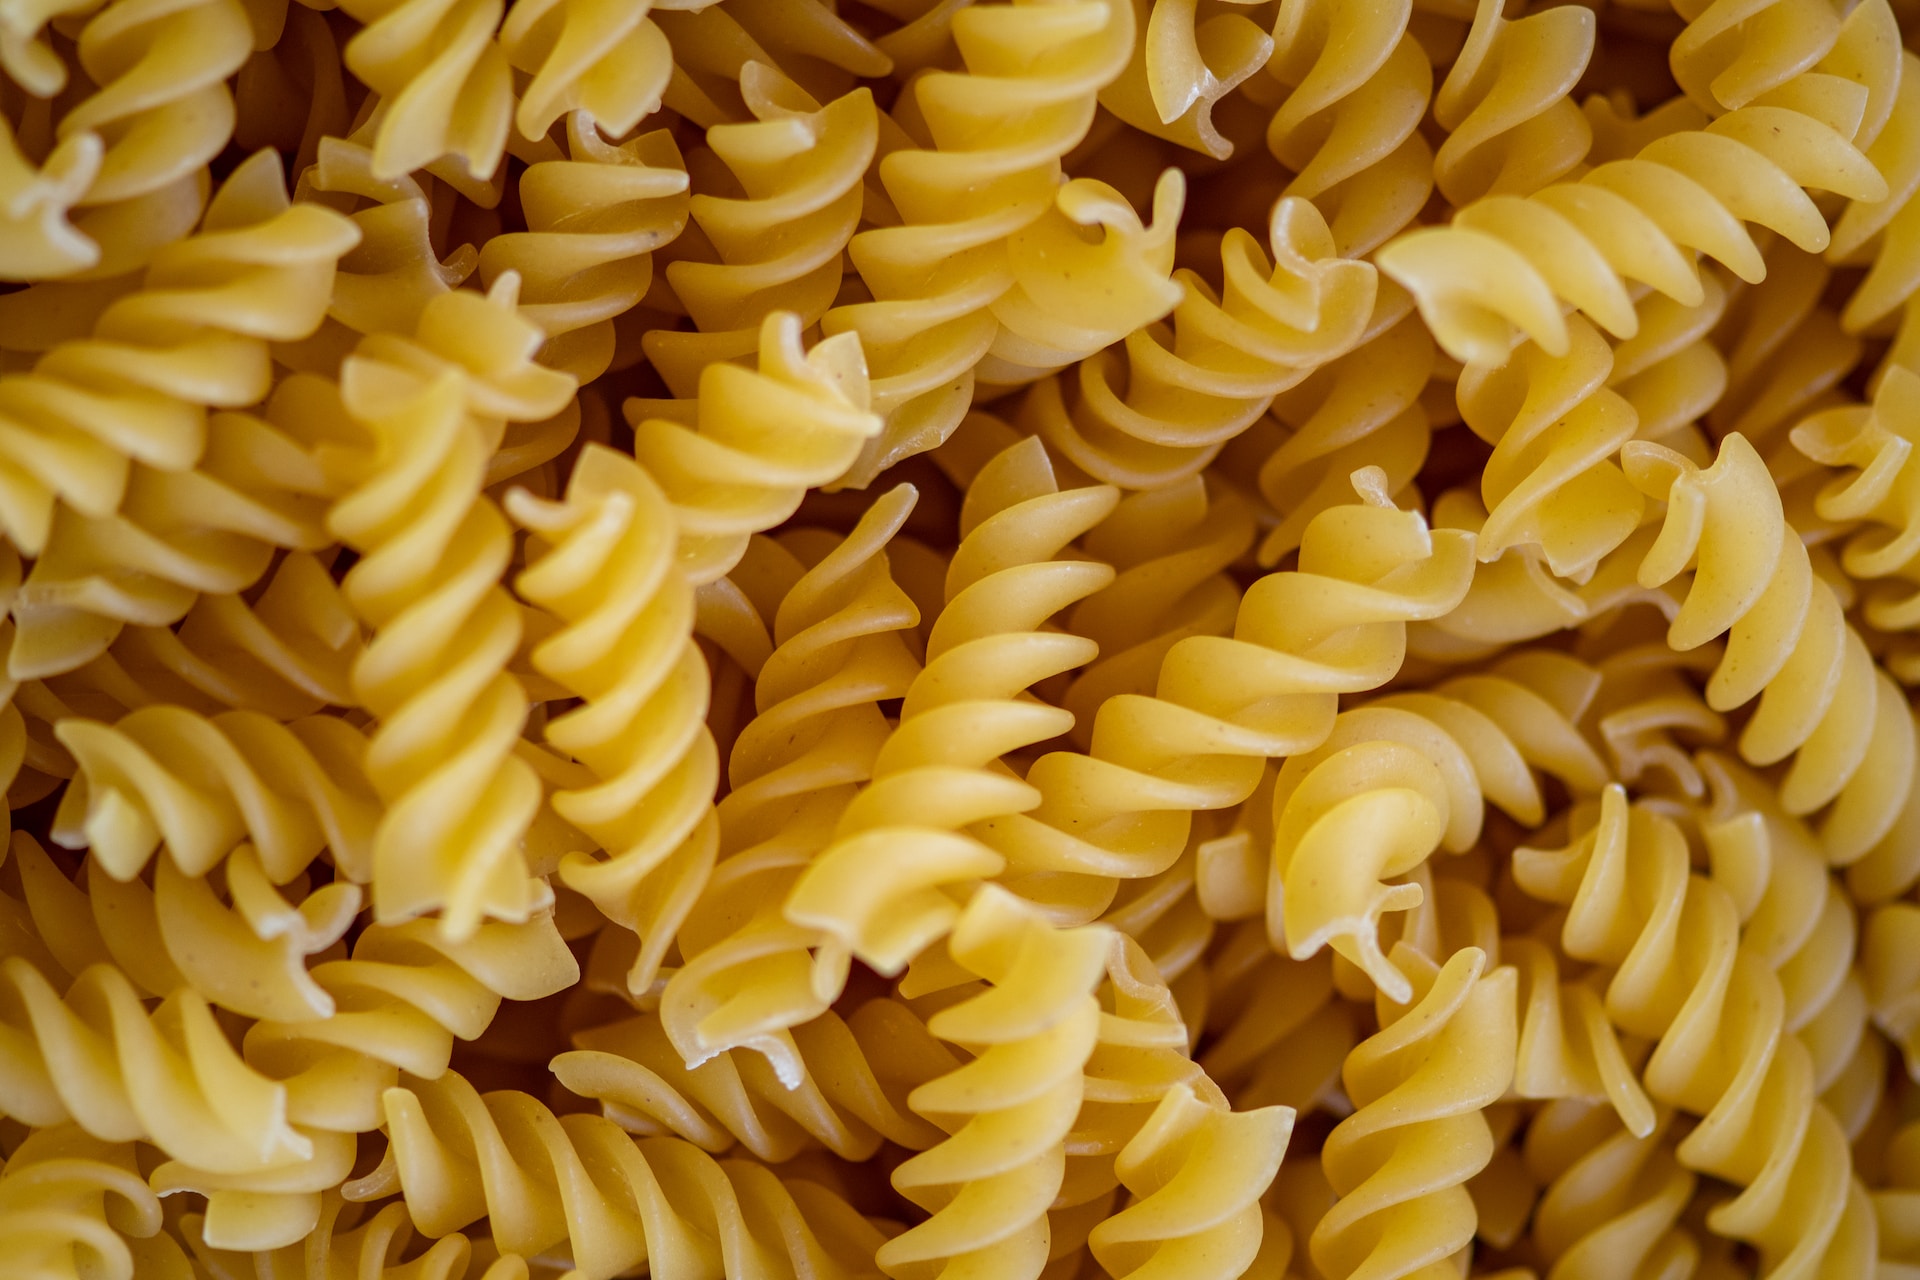 How do Restaurants Keep Pasta from Sticking?